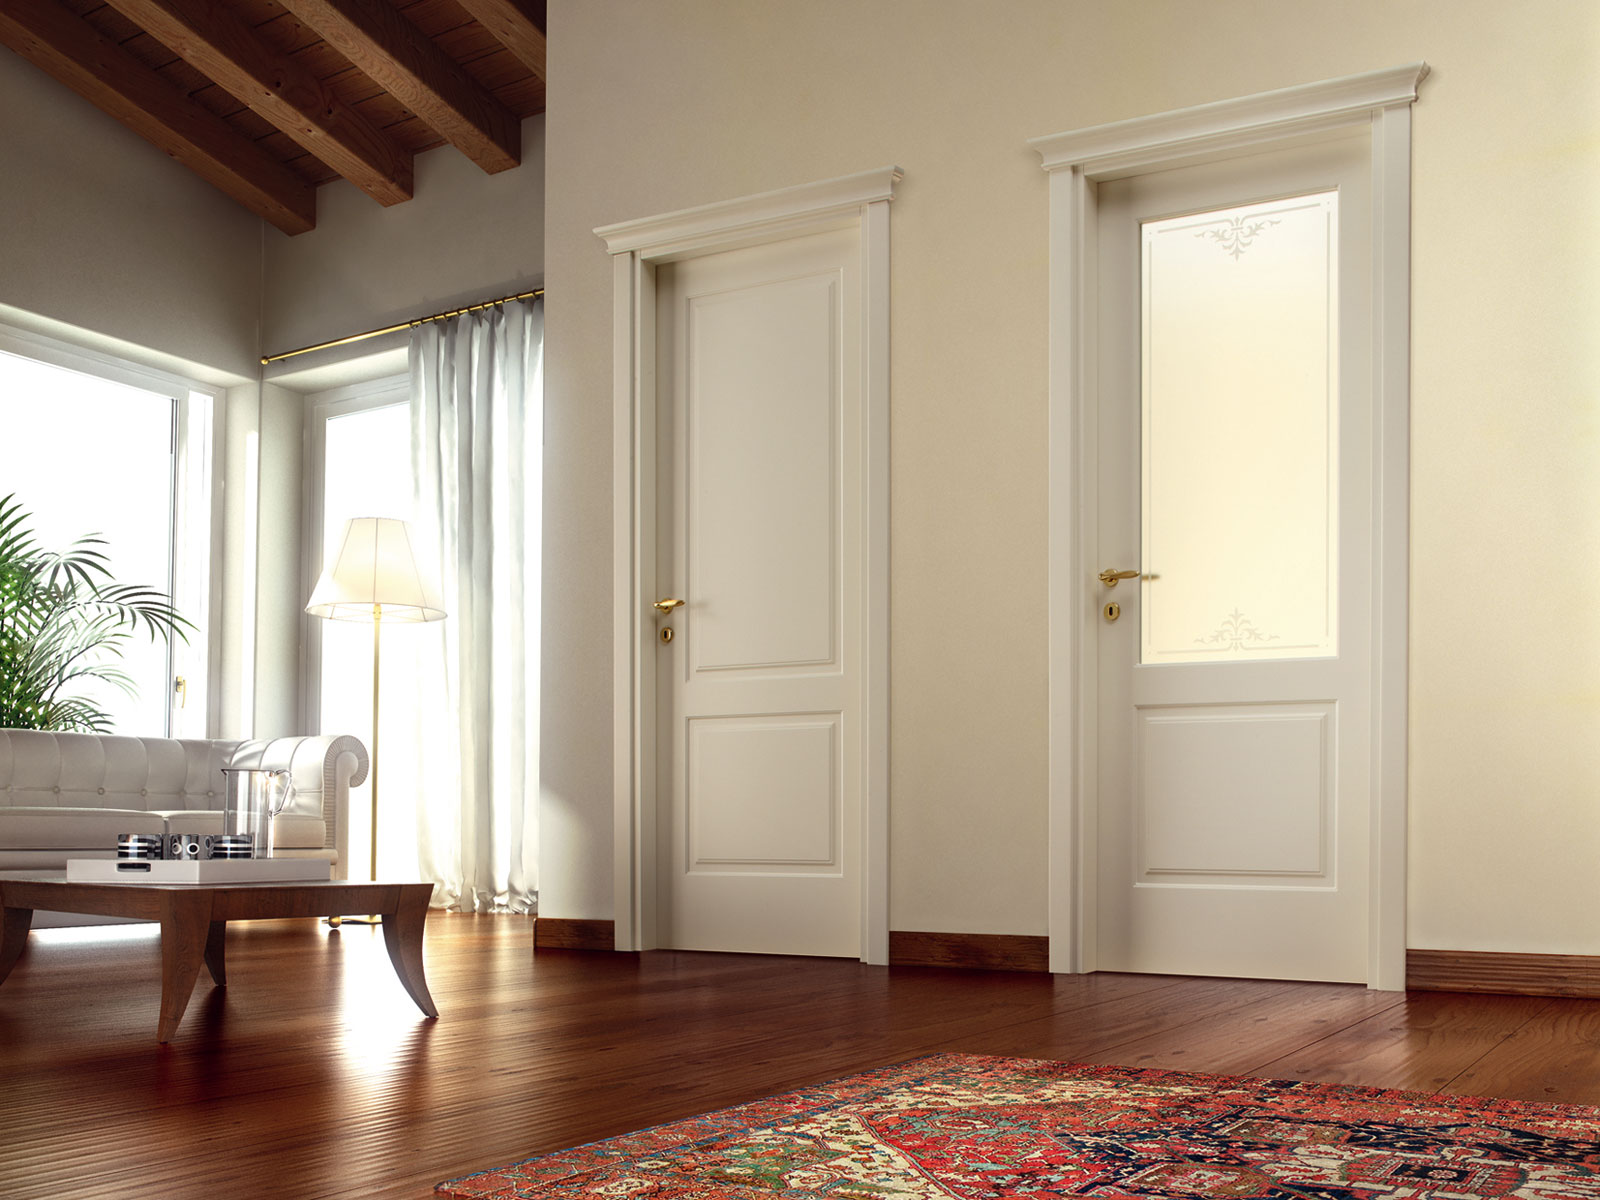 светлый пол и белые двери интерьер